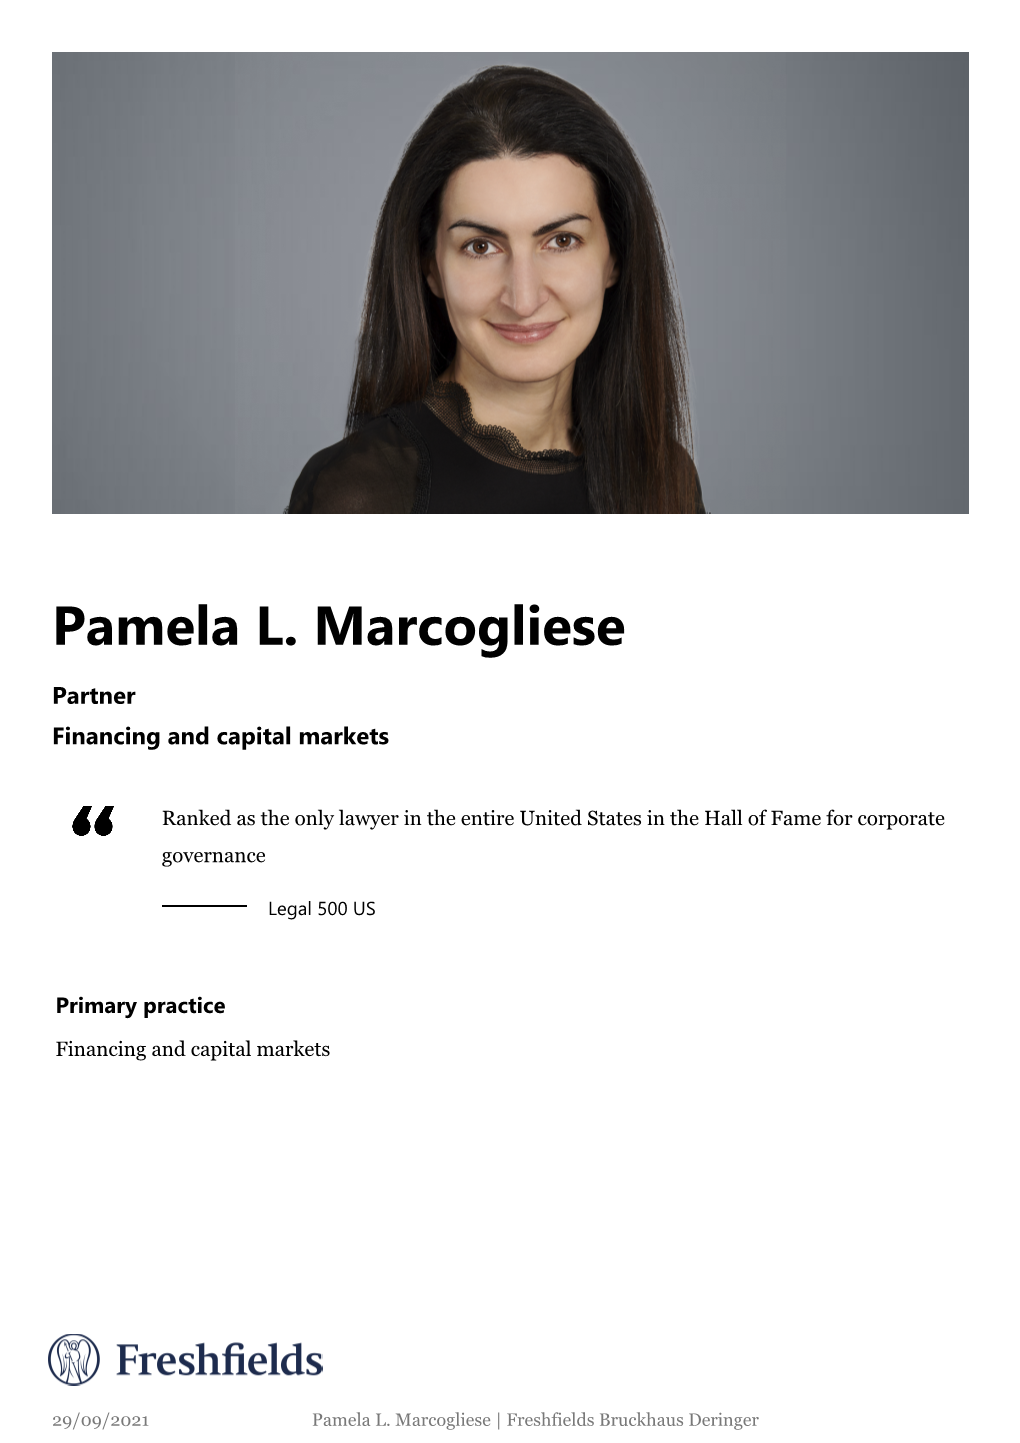 Pamela L. Marcogliese